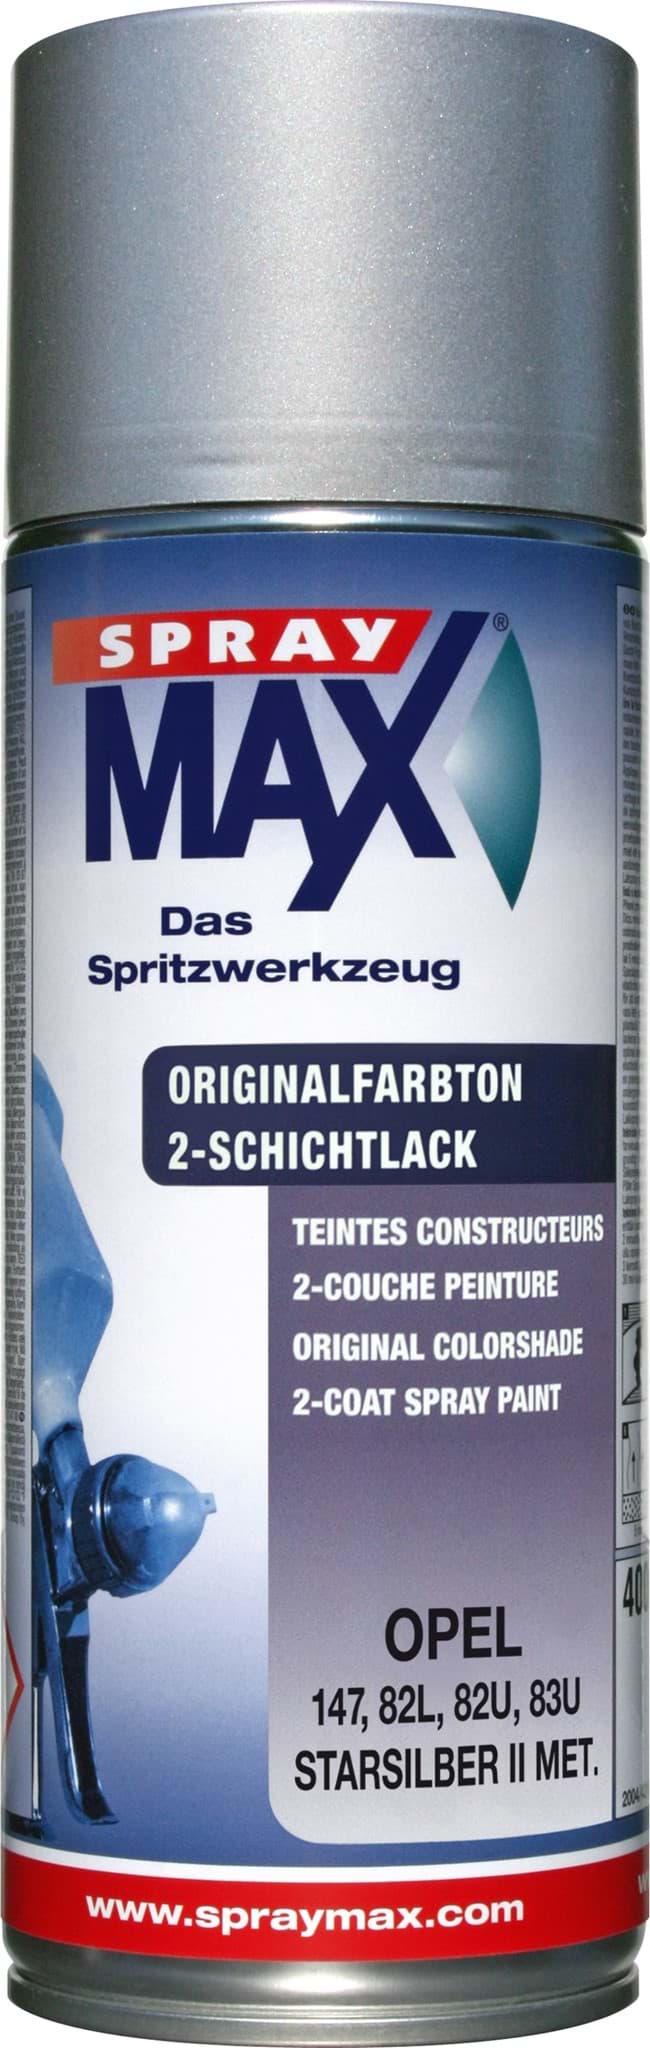 Obraz SprayMax Originalfarbton für Opel 147 starsilberII met.